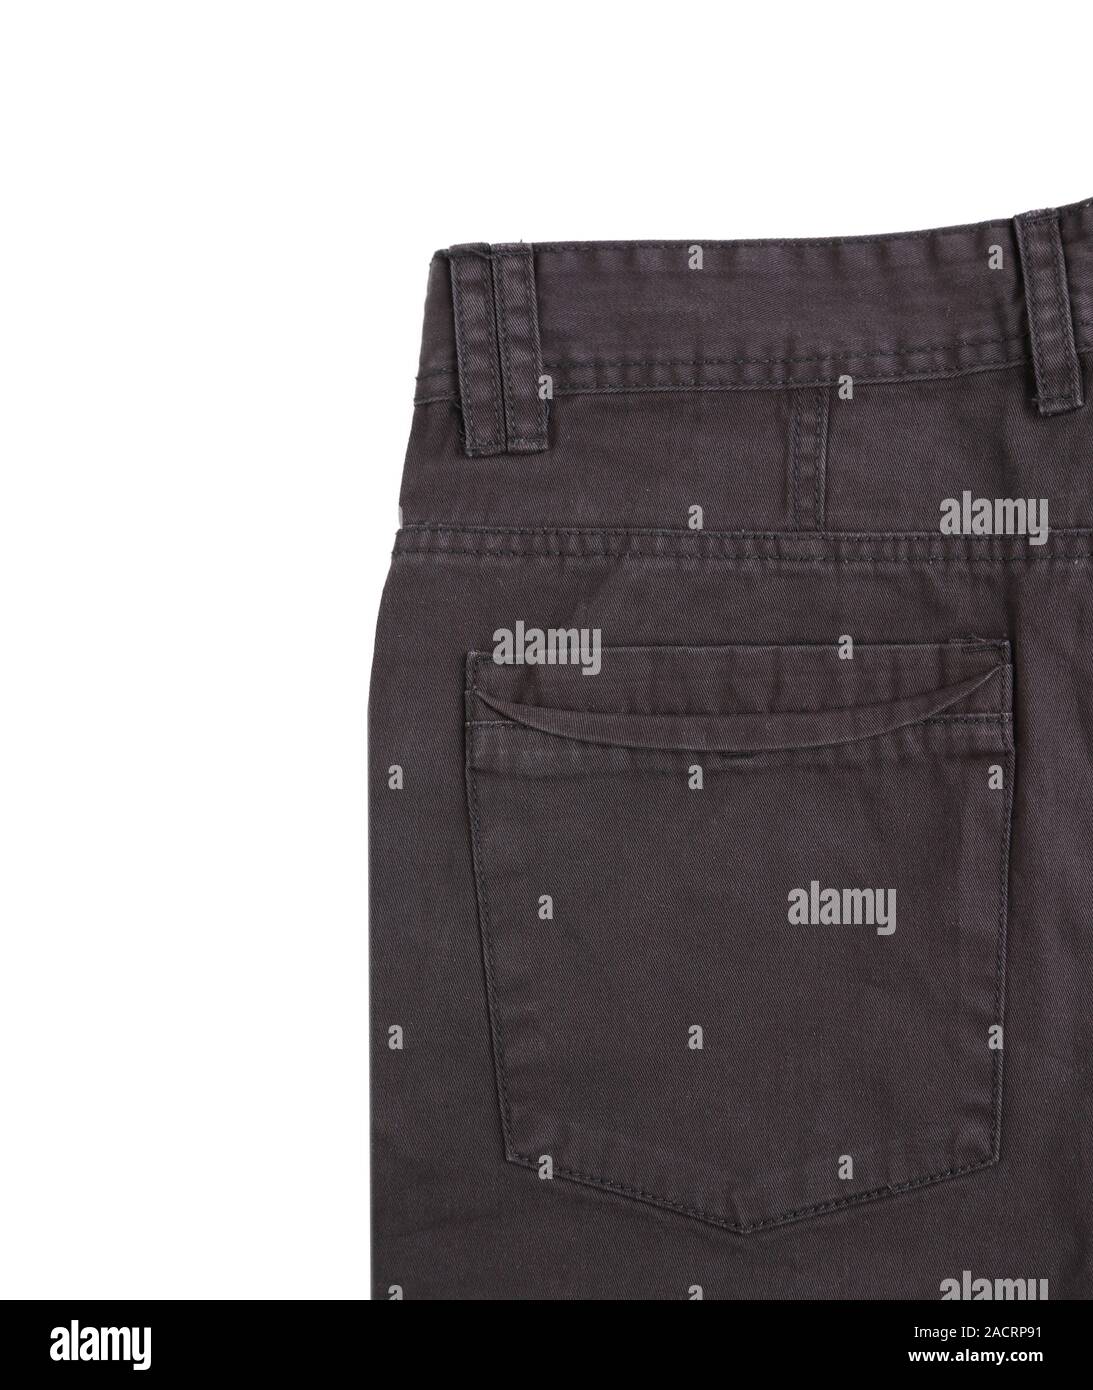 black jeans back pocket isolated Stock Photo - Alamy